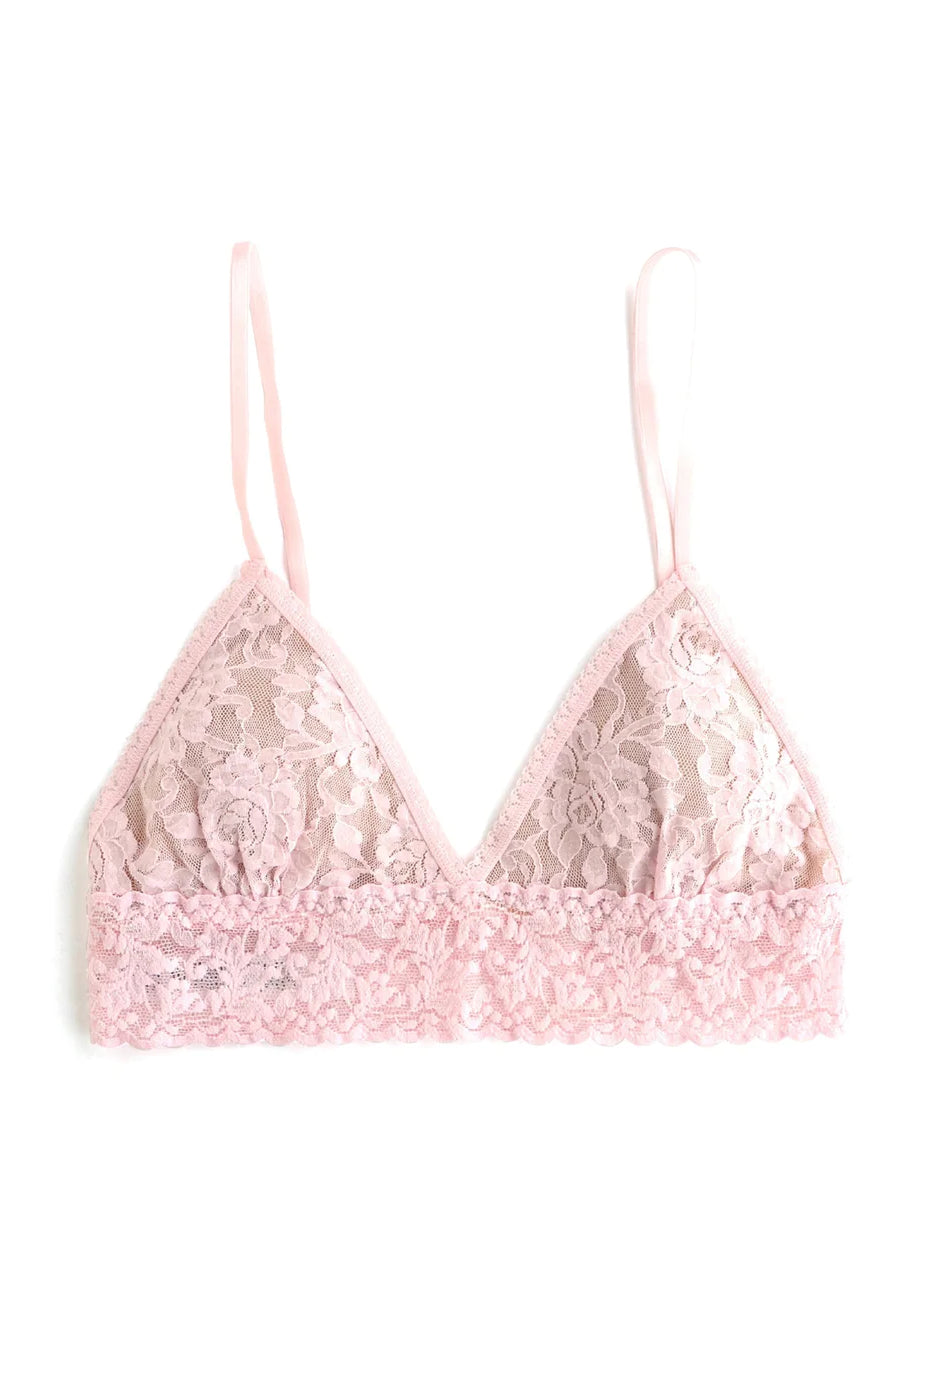 Signature Lace Padded Triangle Bralette - Bliss Pink - Flirt! Luxe Lingerie & Sleepwear